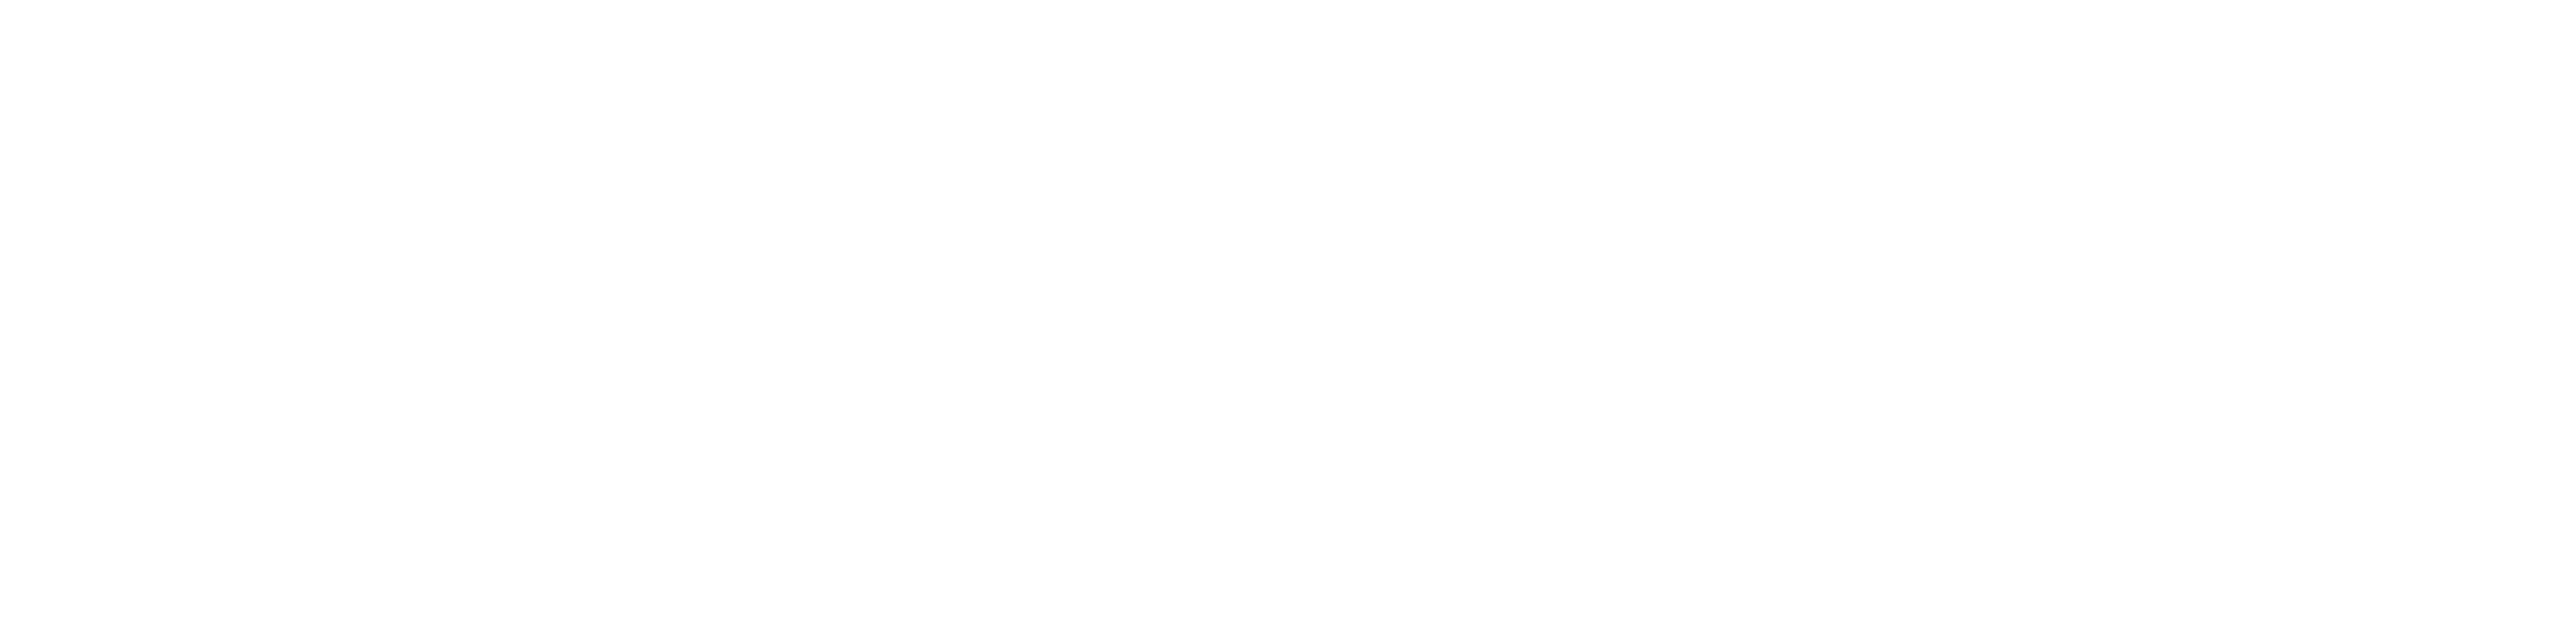 YYT Safe Dryer Vents Logo White